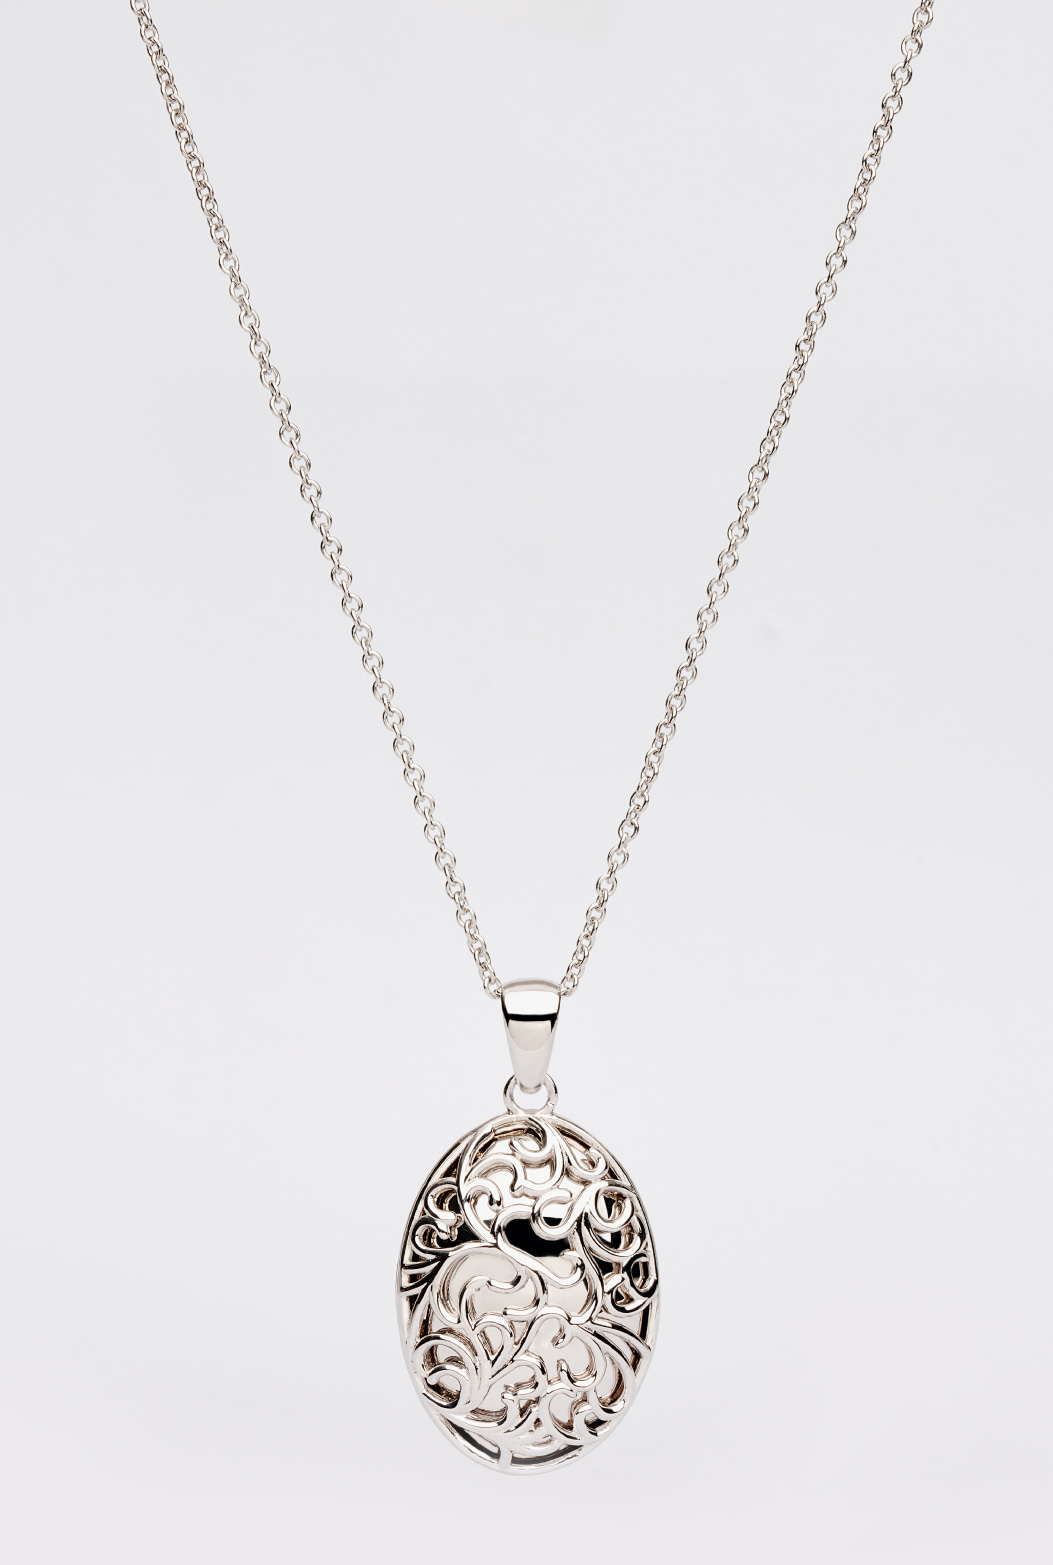 vintage baroque pattern necklace. N-004